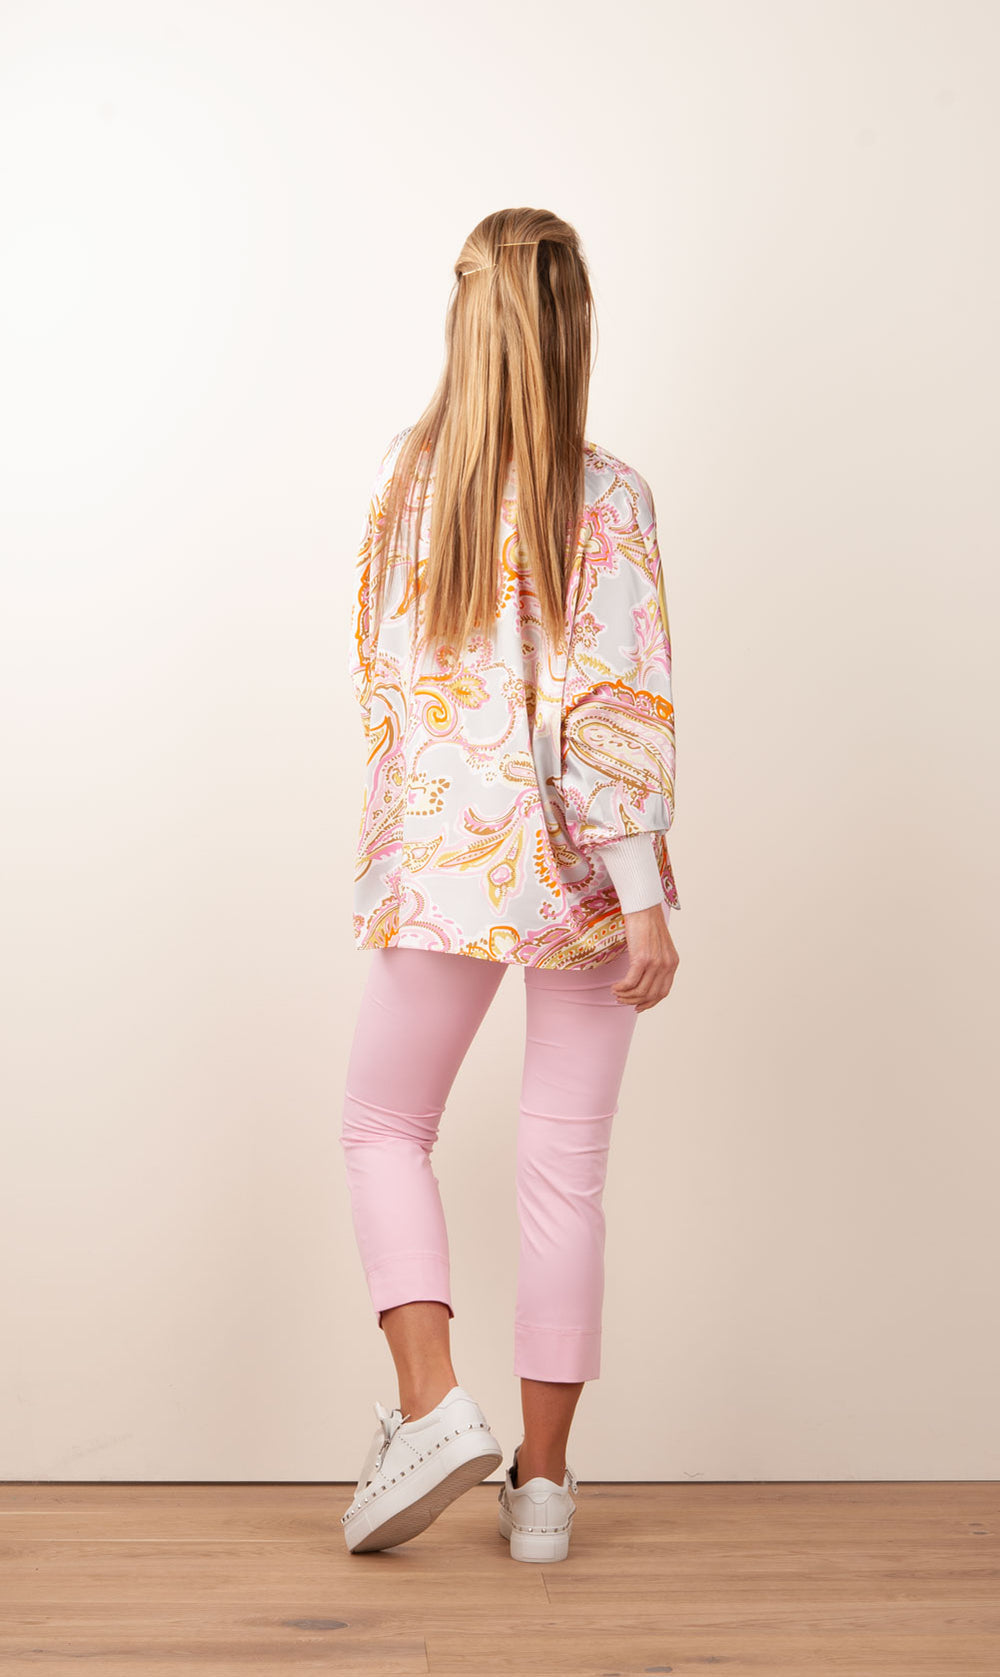 Seductive Capri Cotton Pant in Rosa - Size 36 Available